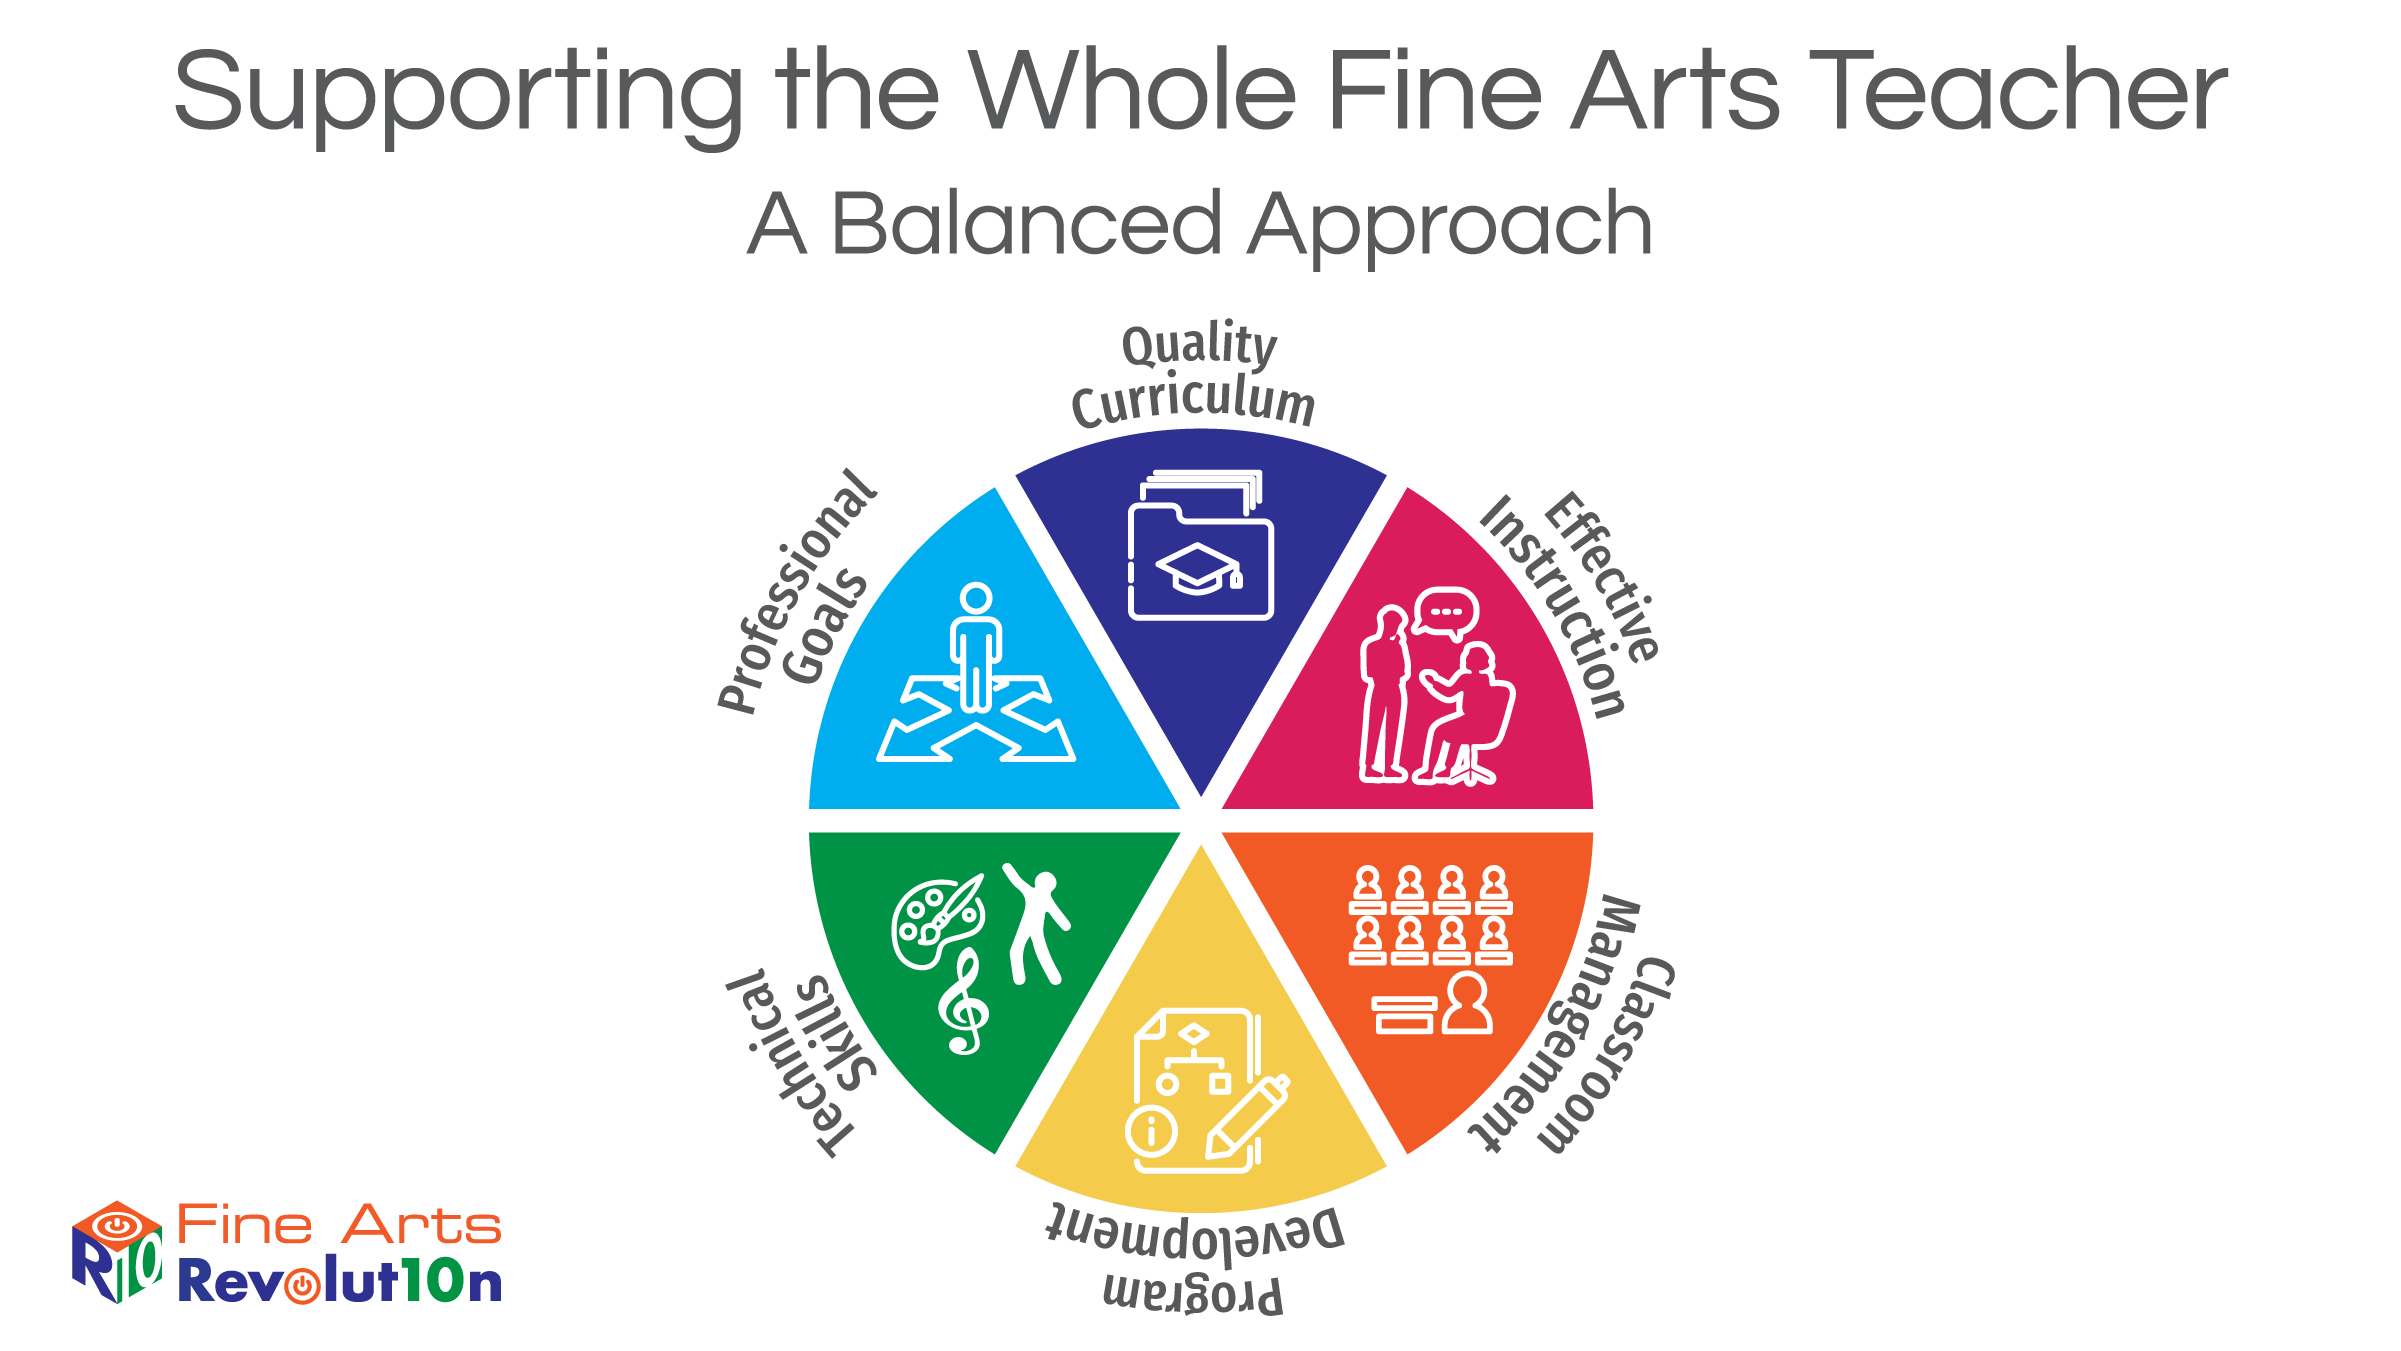 Supporting the Whole Fine Arts Teacher - A Balanced Approach. Quality Curriculum, Effective Instruction, Classroom Management, Program Dev, Technical Skills, Prof. Goals